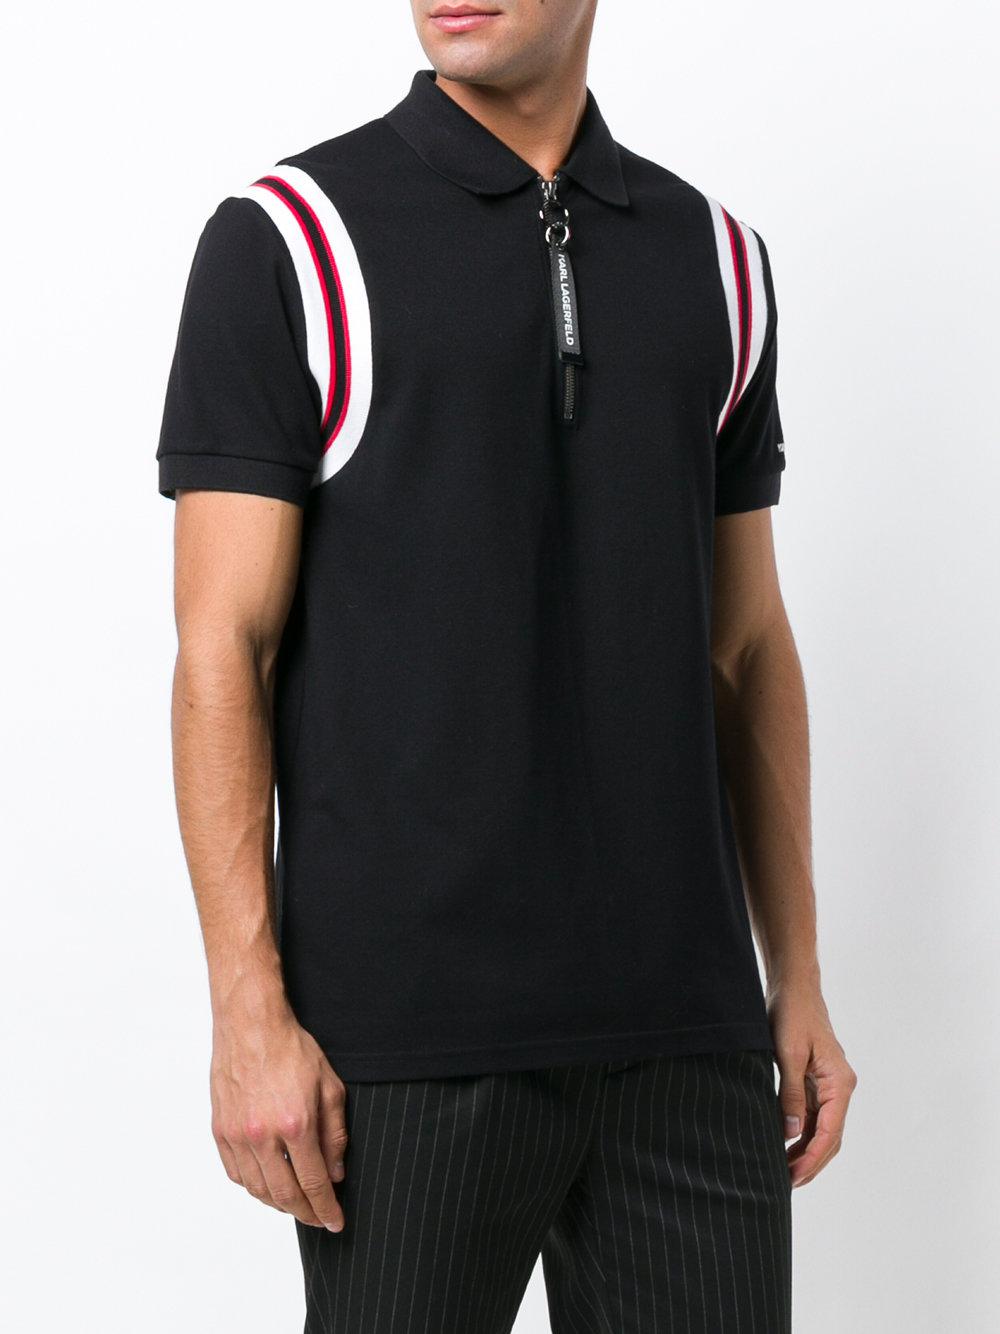 Karl Lagerfeld Cotton Rib Knit Detail Polo Shirt in Black for Men - Lyst